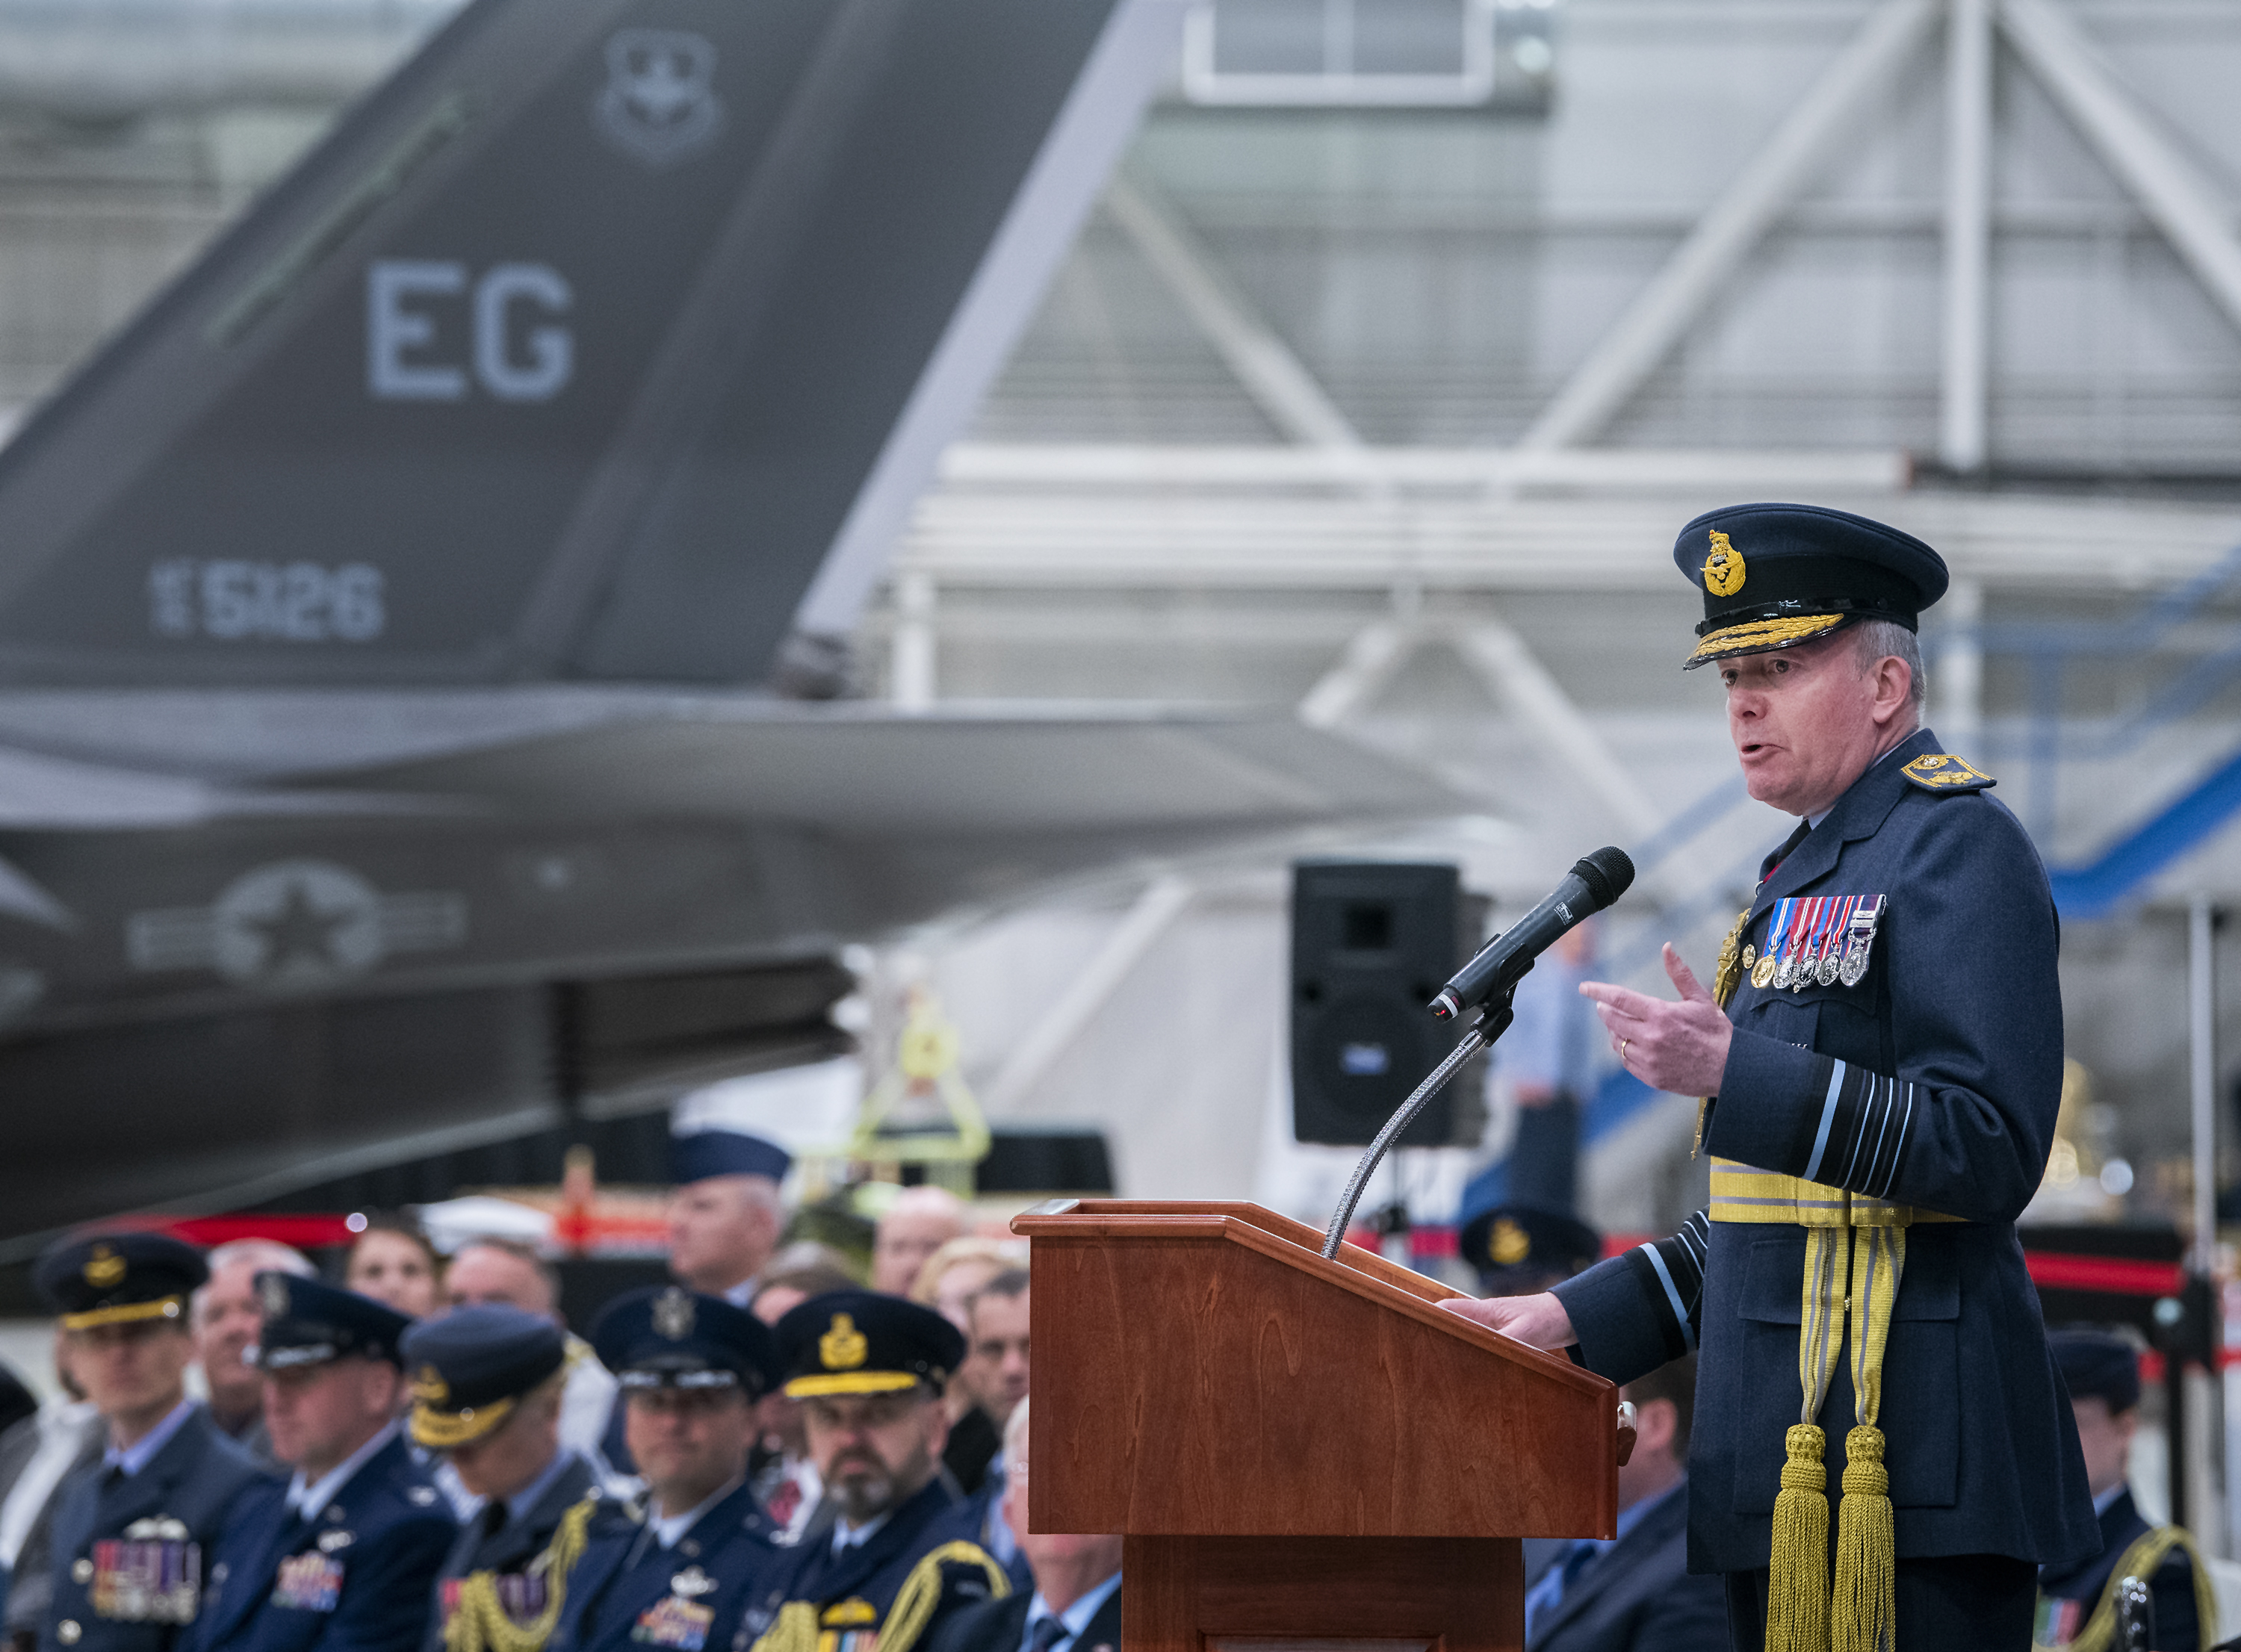 Chief of the Air Staff, Sir Rich Knighton, giving a speech